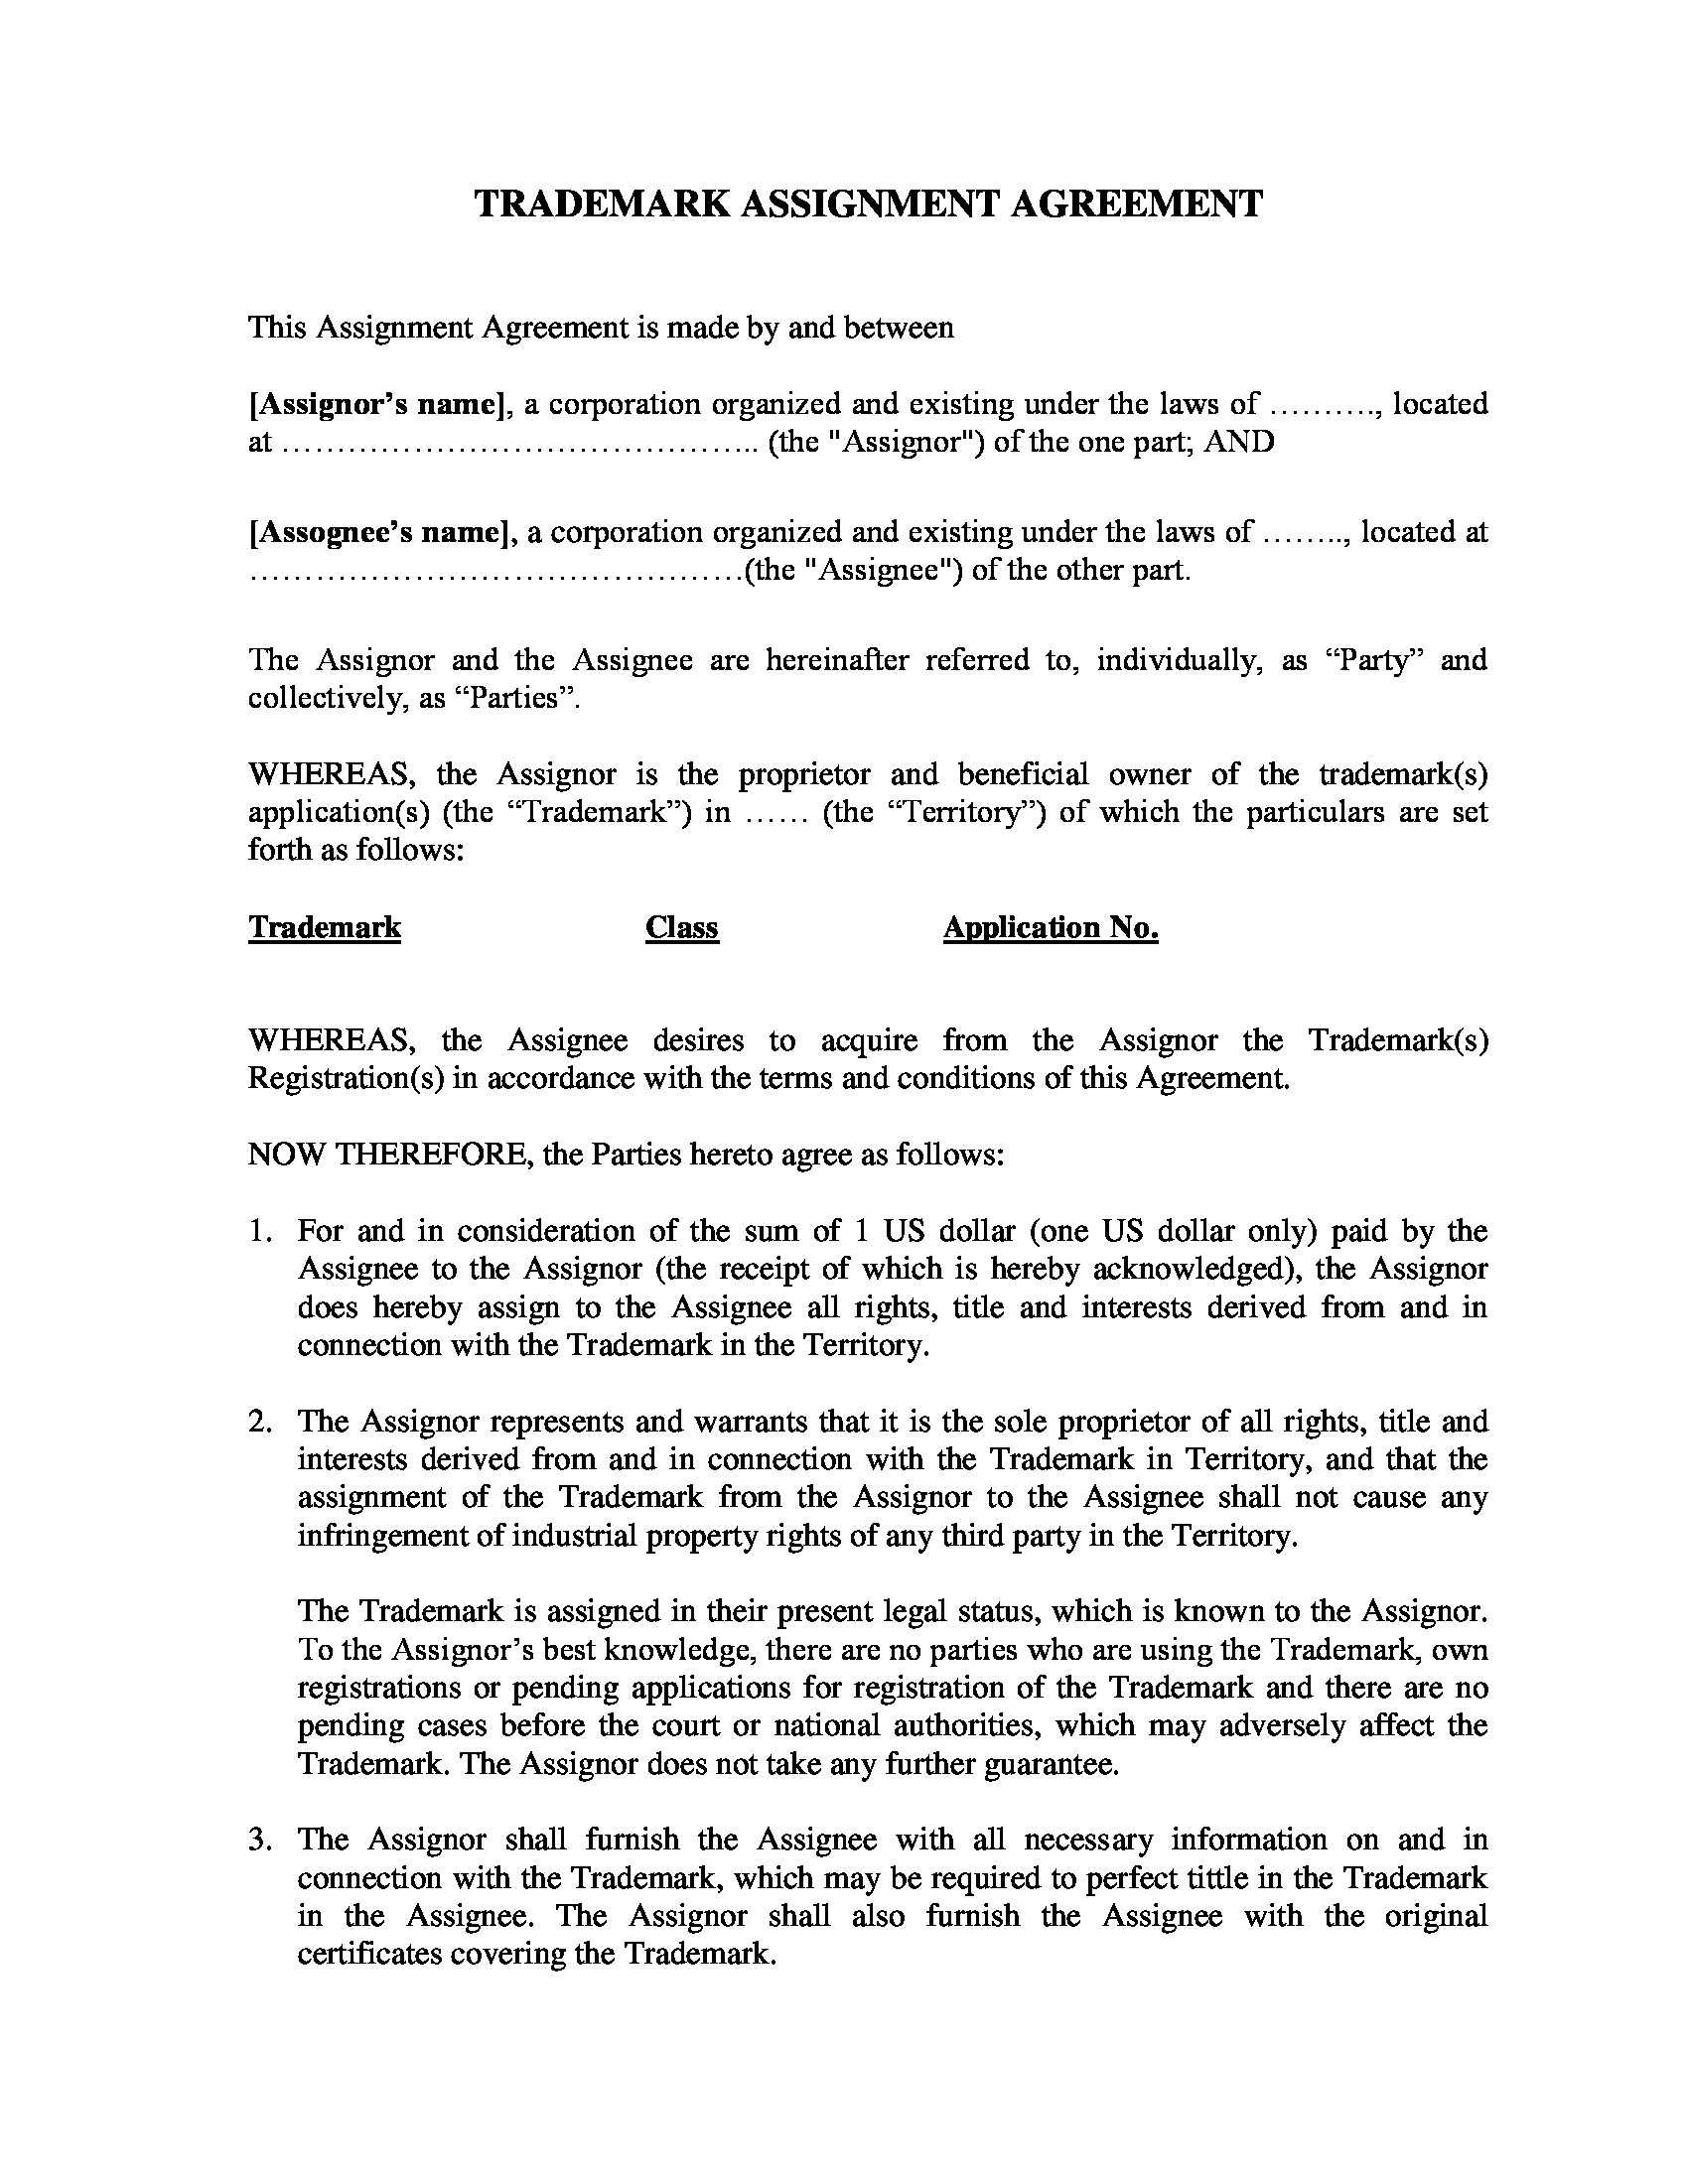 trademark assignment agreement template free